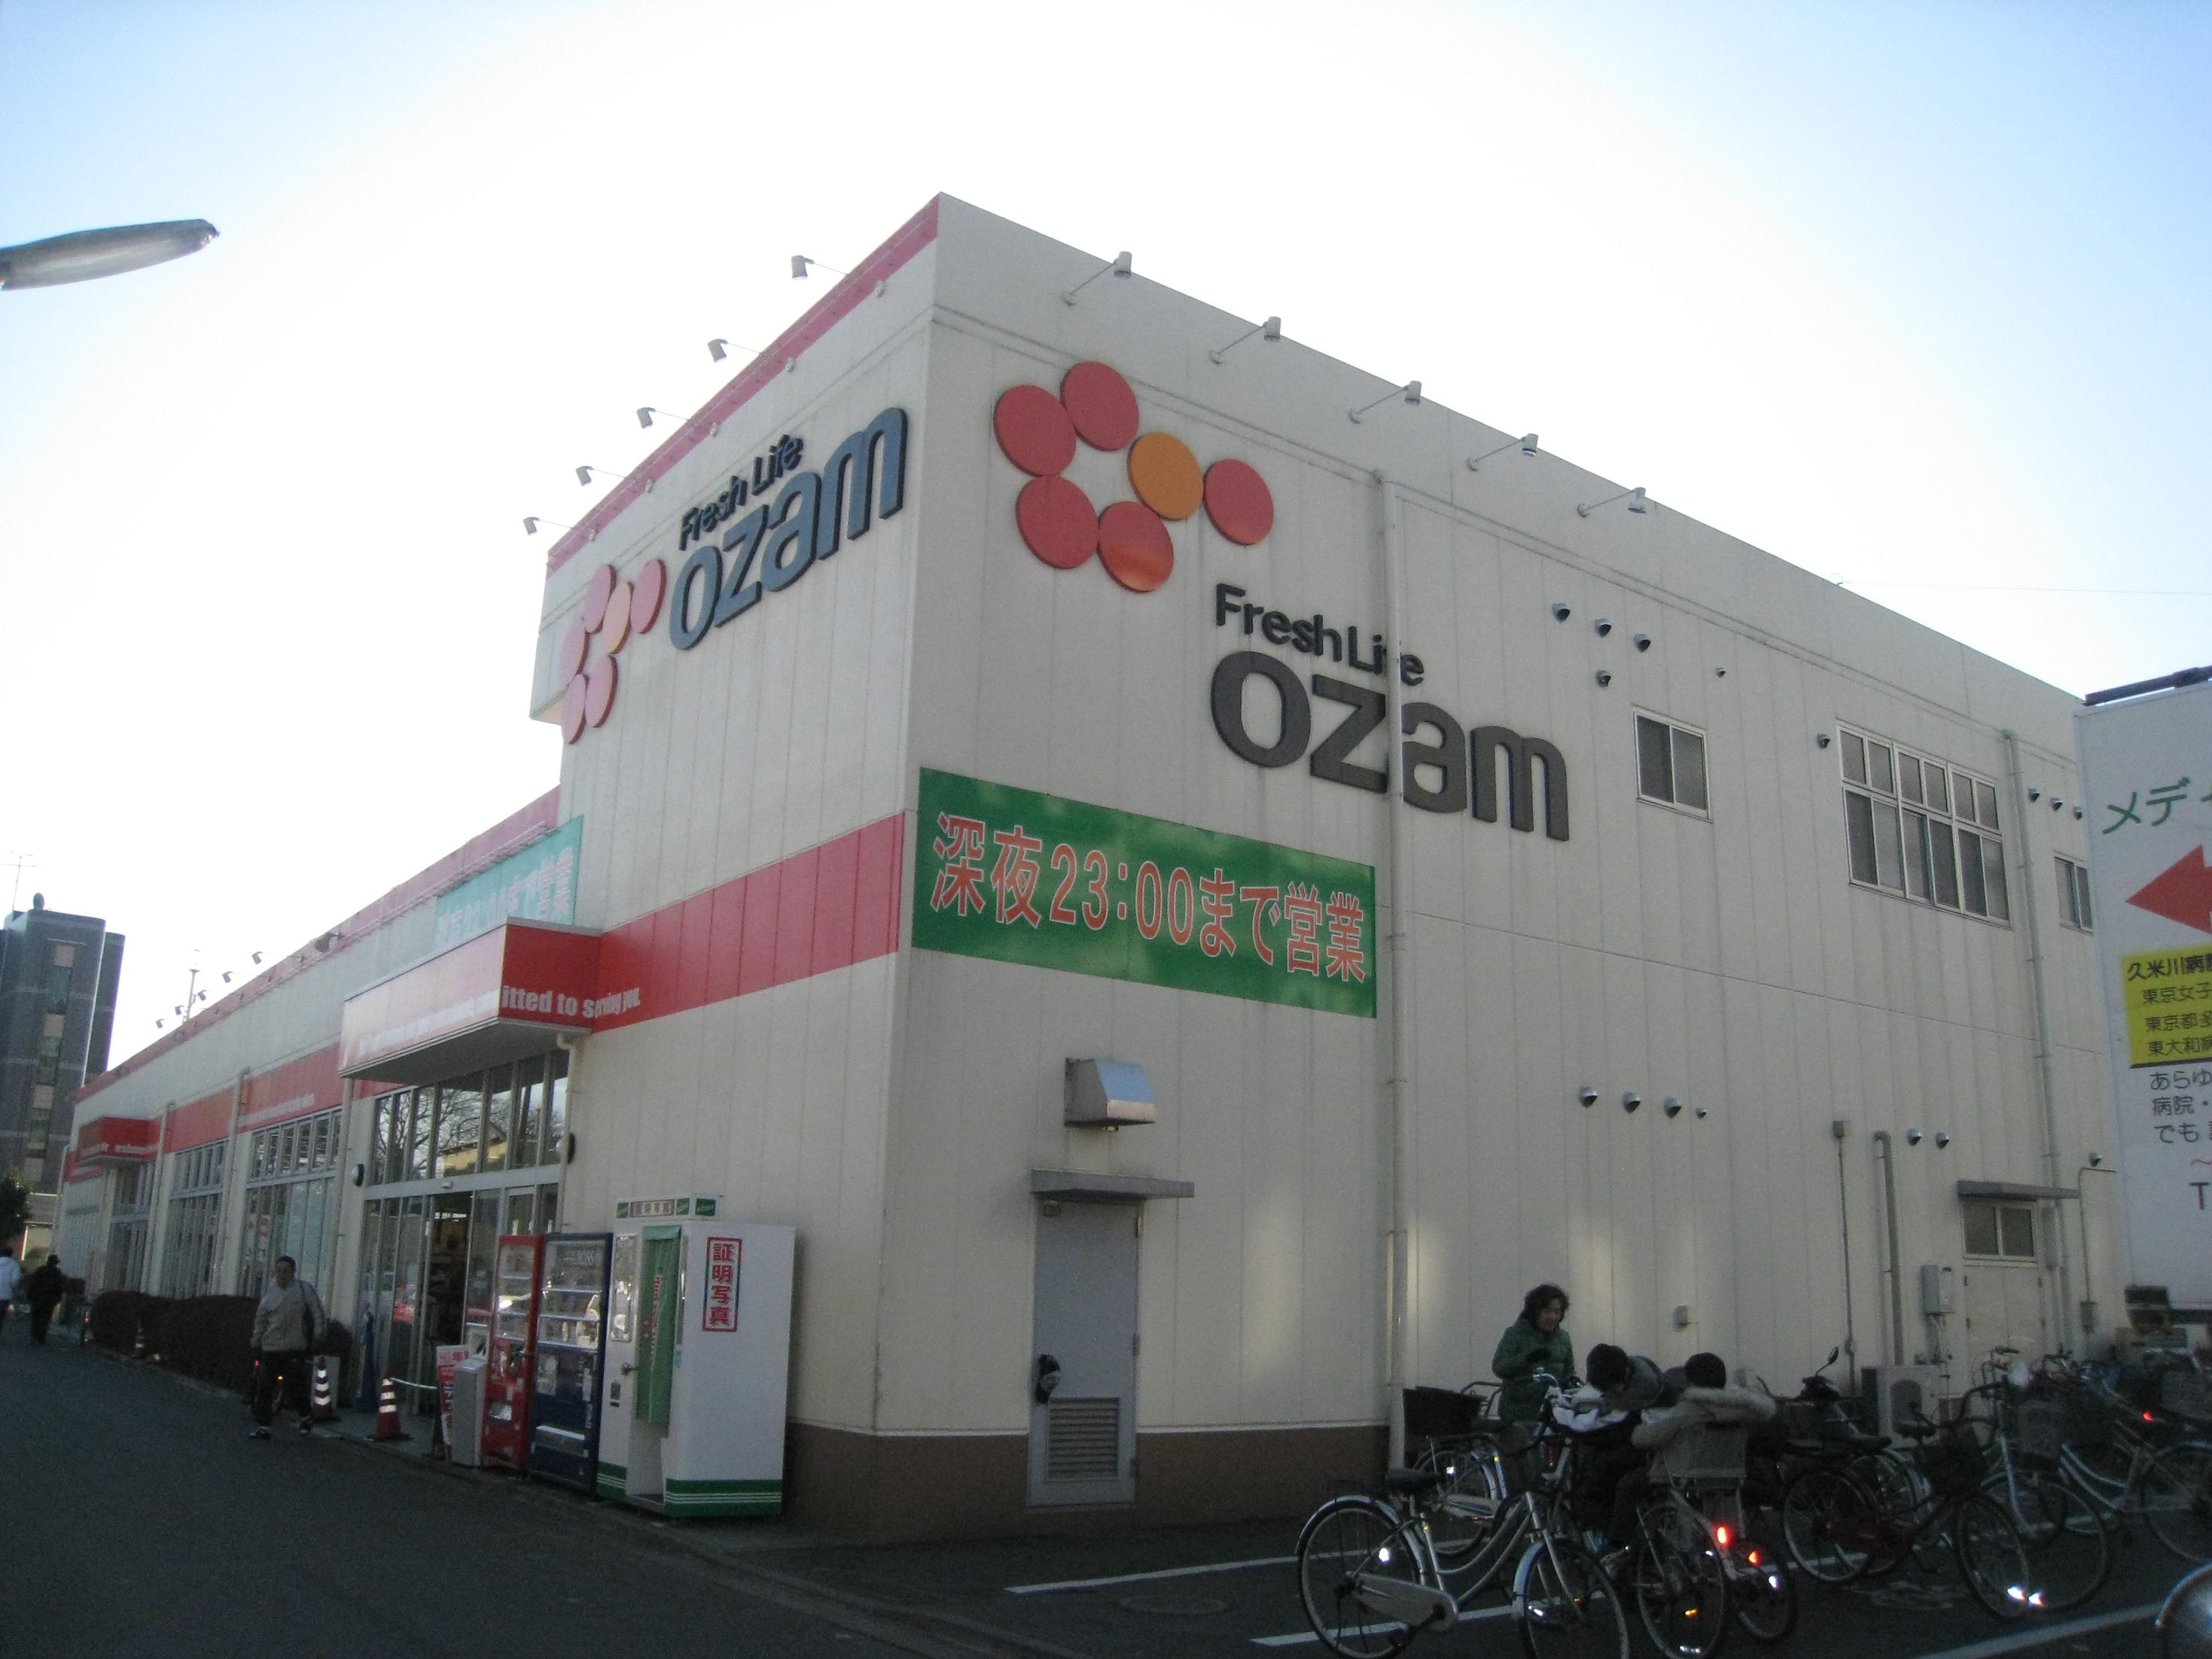 Supermarket. 343m to Super Ozamu Misumi-cho store (Super)